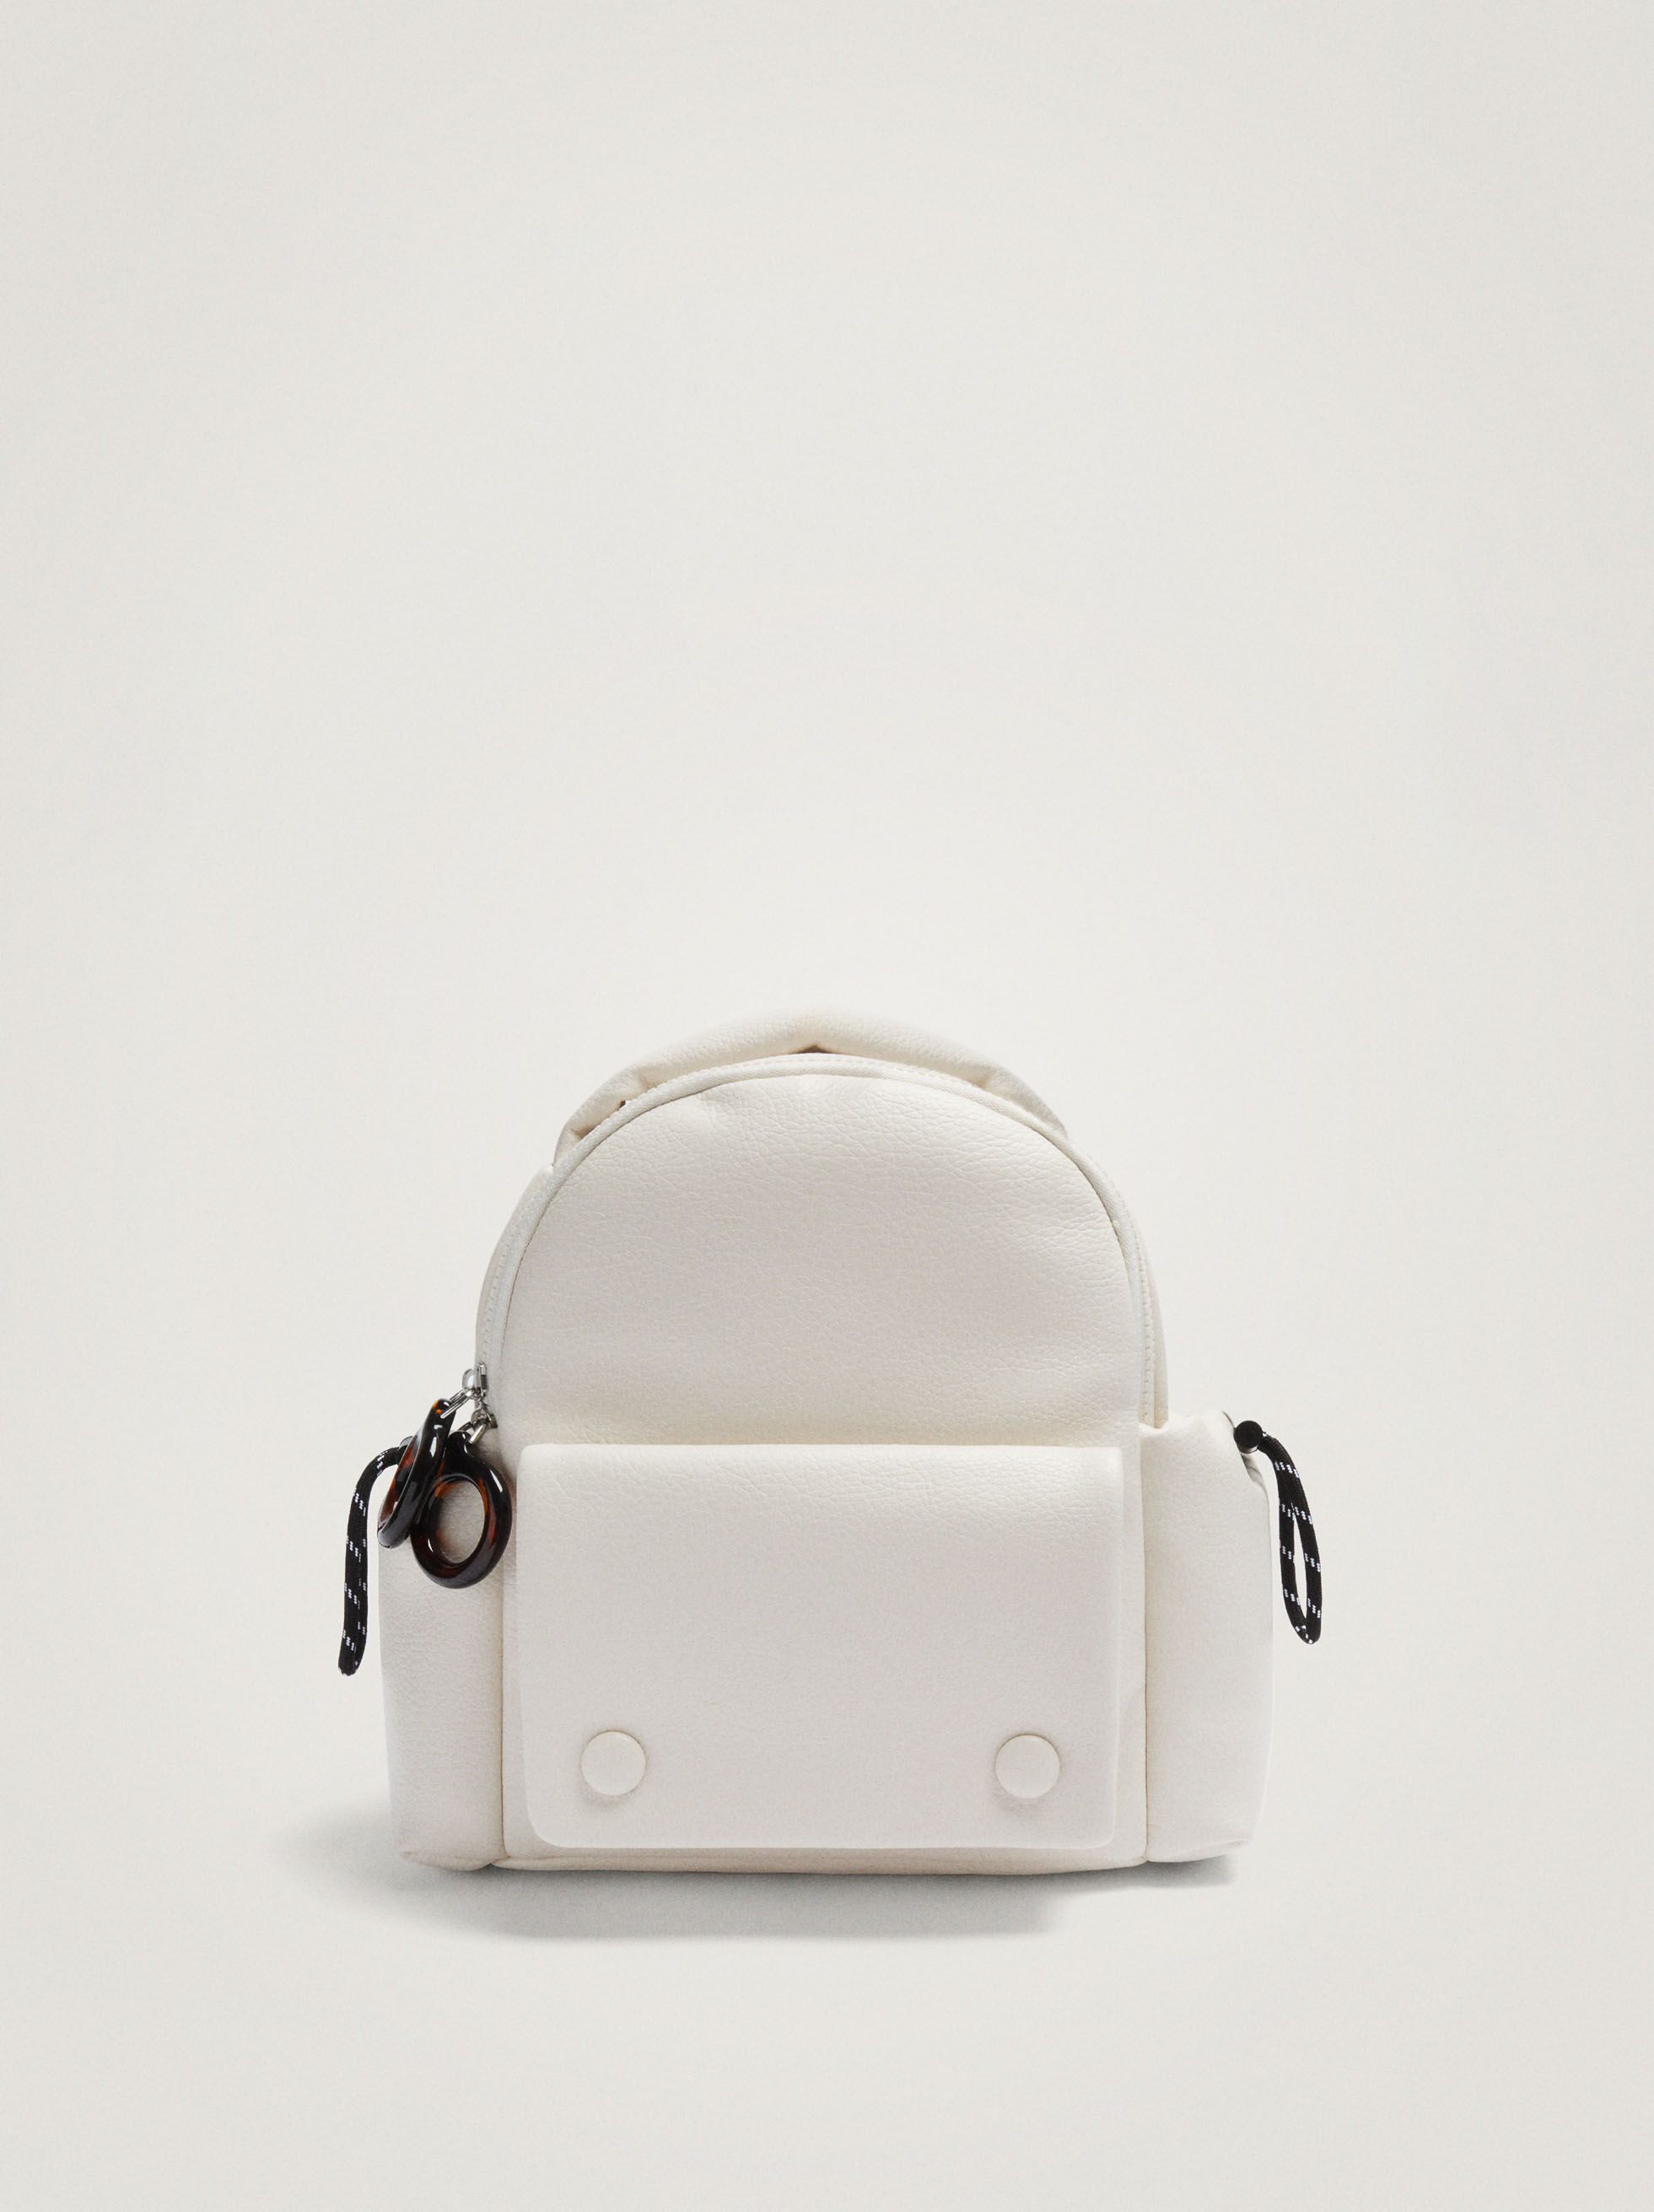 Backpack With Pockets - Camel - Woman - Backpacks - parfois.com